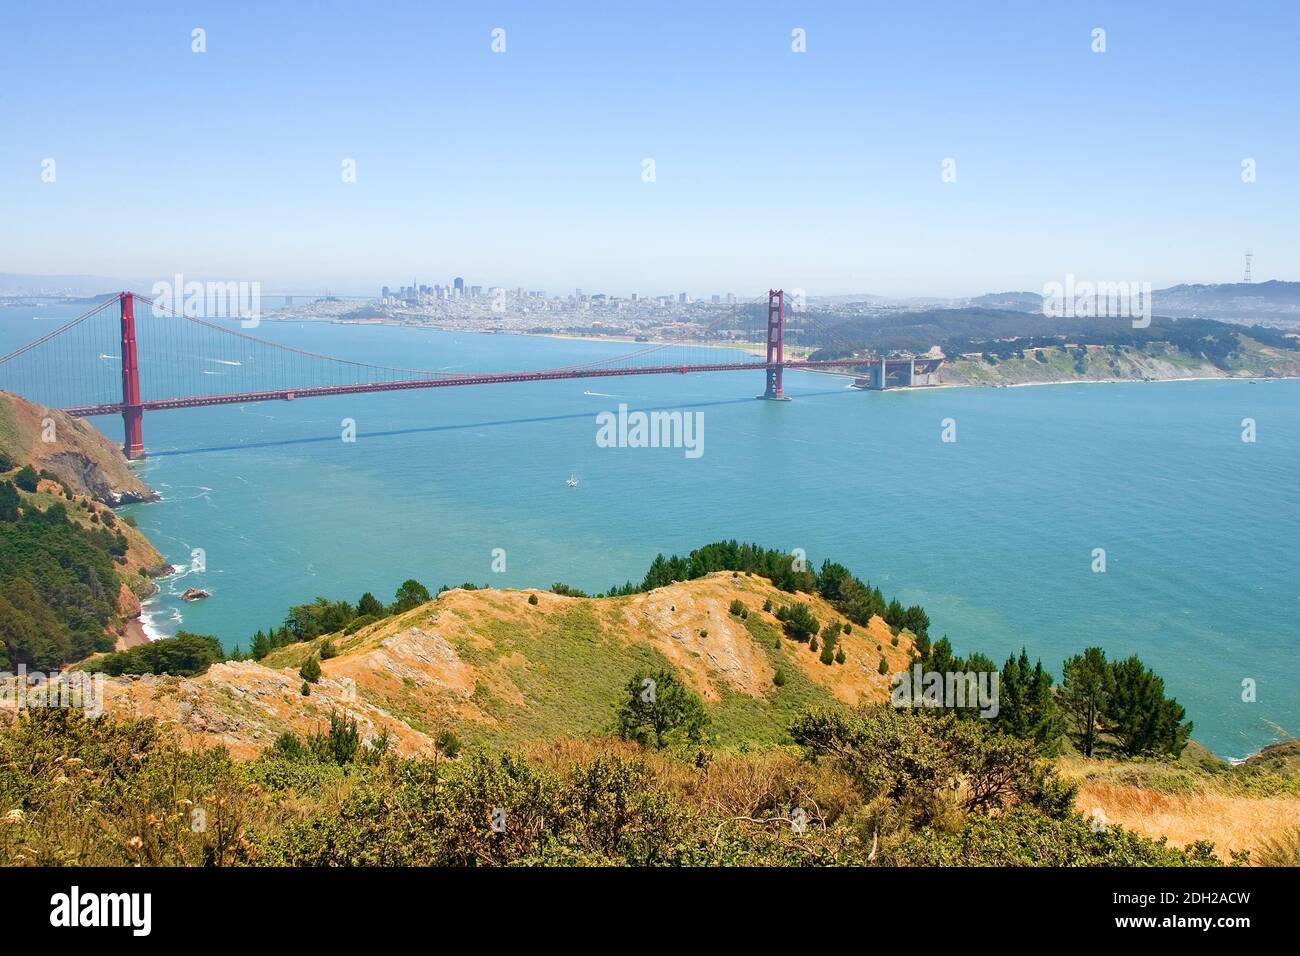 Vista del famoso puente Golden Gate en San Francisco, California Foto de stock